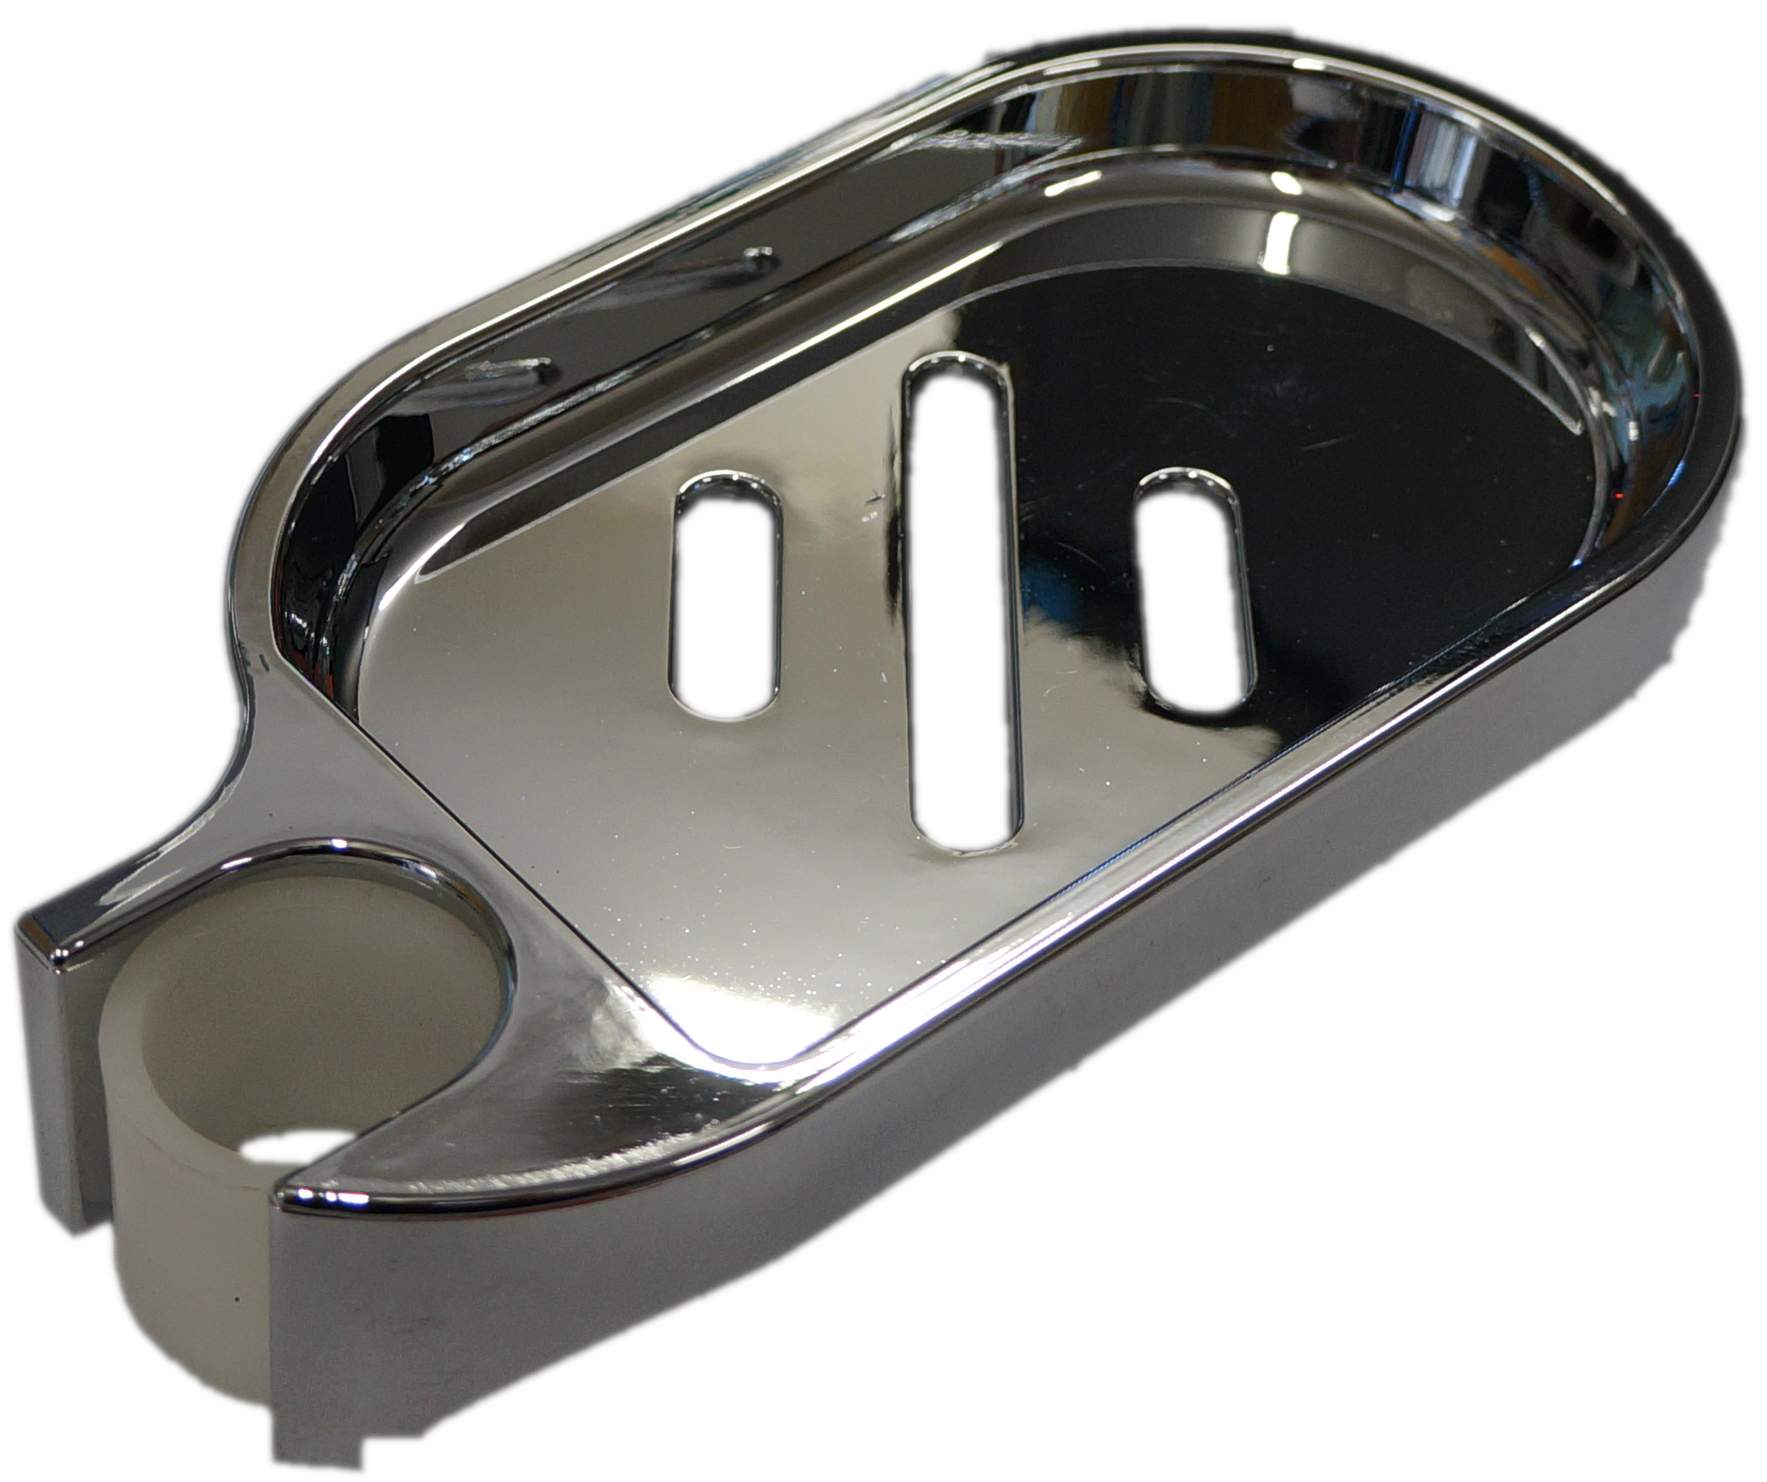 Chromium-plated soap dish for 25 mm diameter shower rod